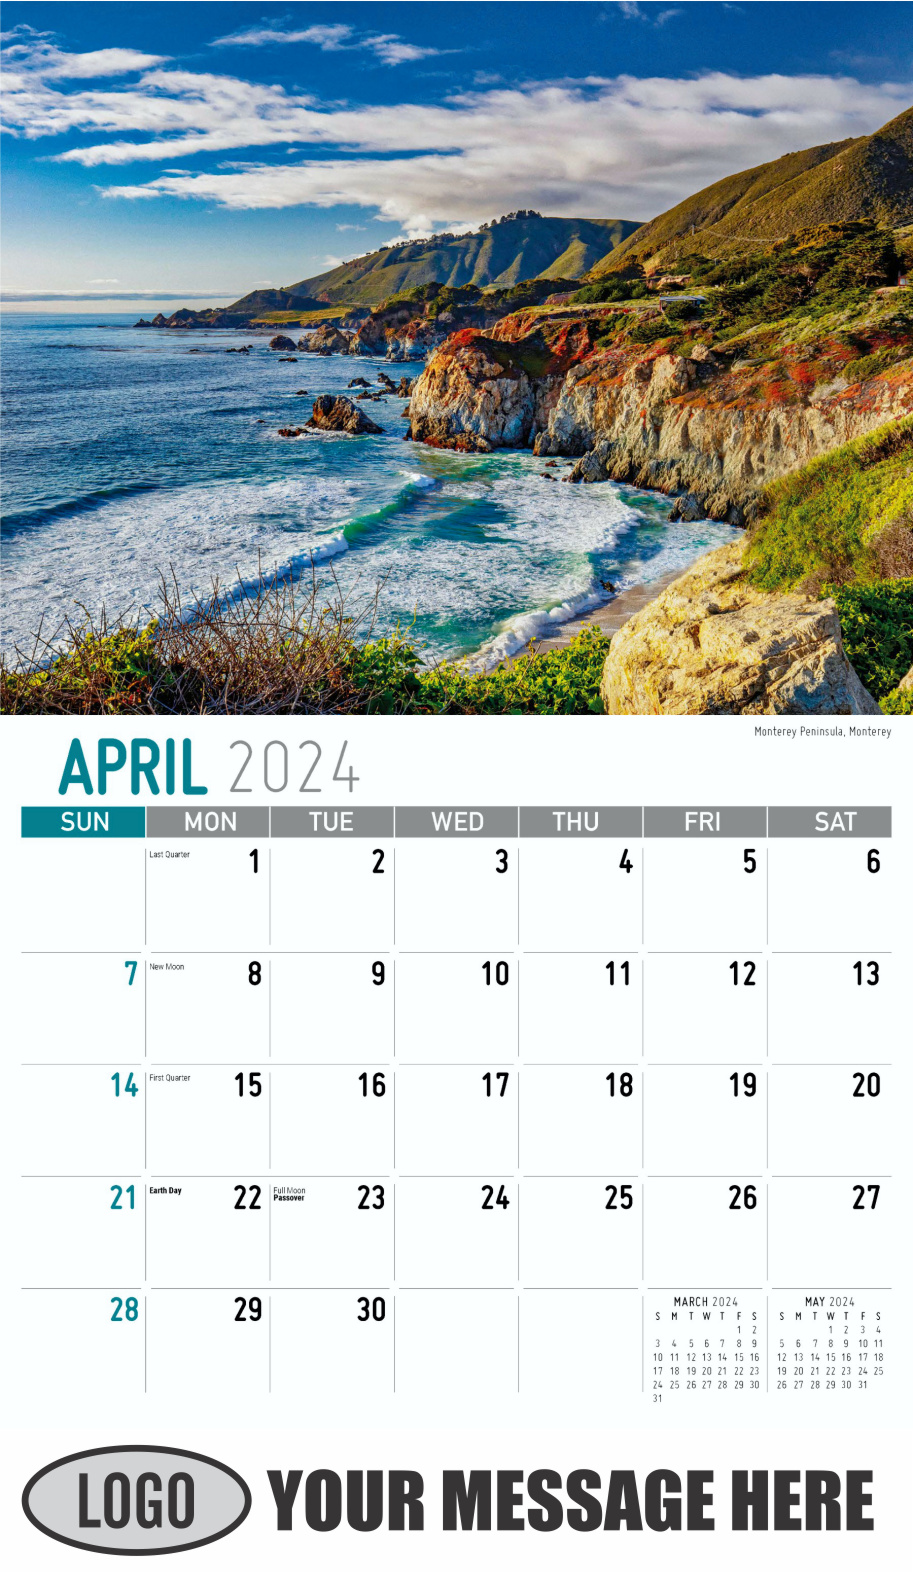 Scenes of California 2024 Business Advertising Wall Calendar - April